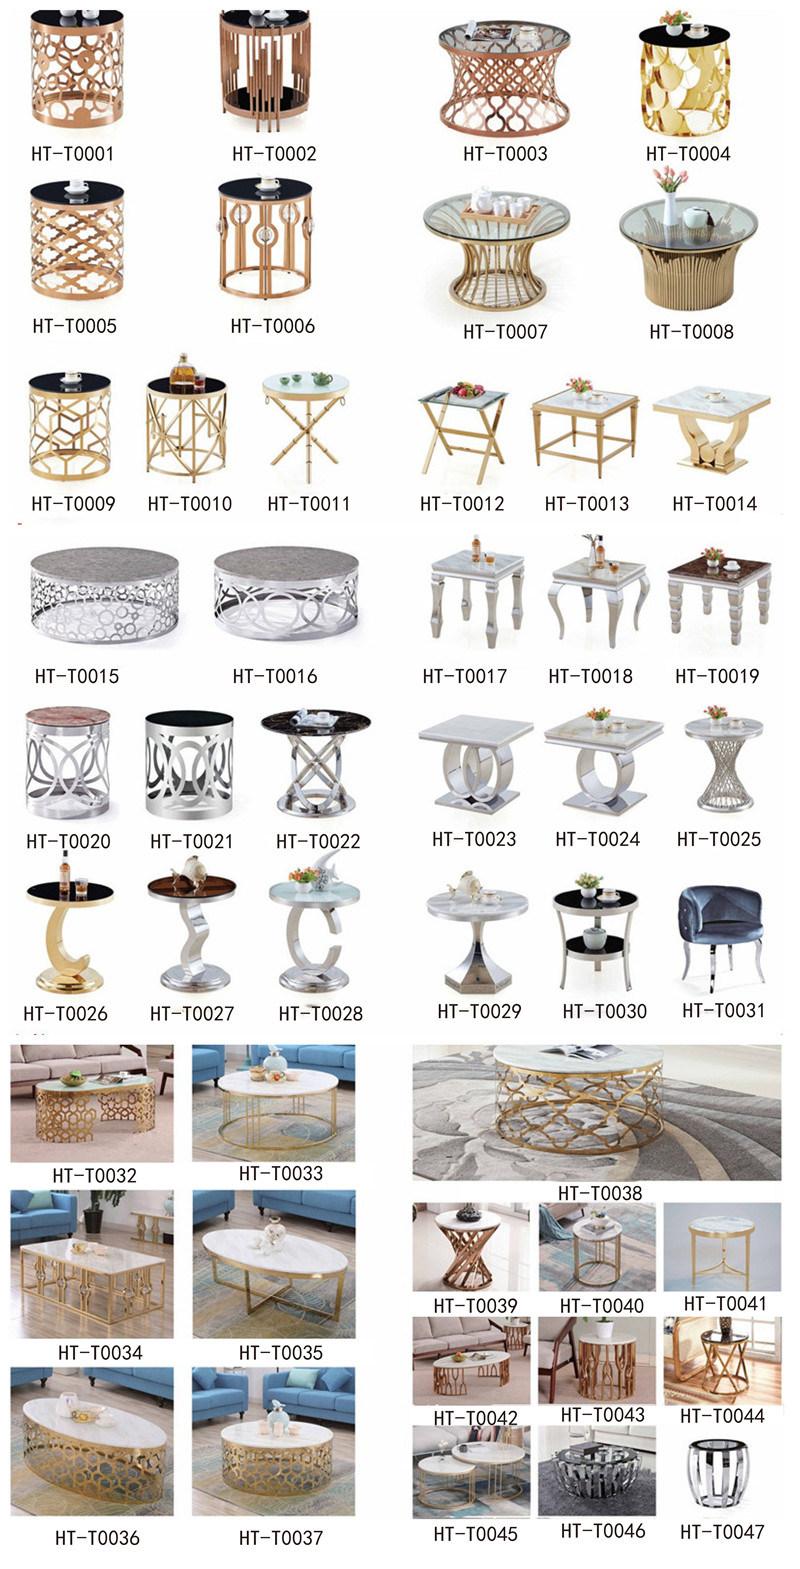 Modern Home Restaurant Furniture Set Special Black Metal Marble or Board Top Living Room Table